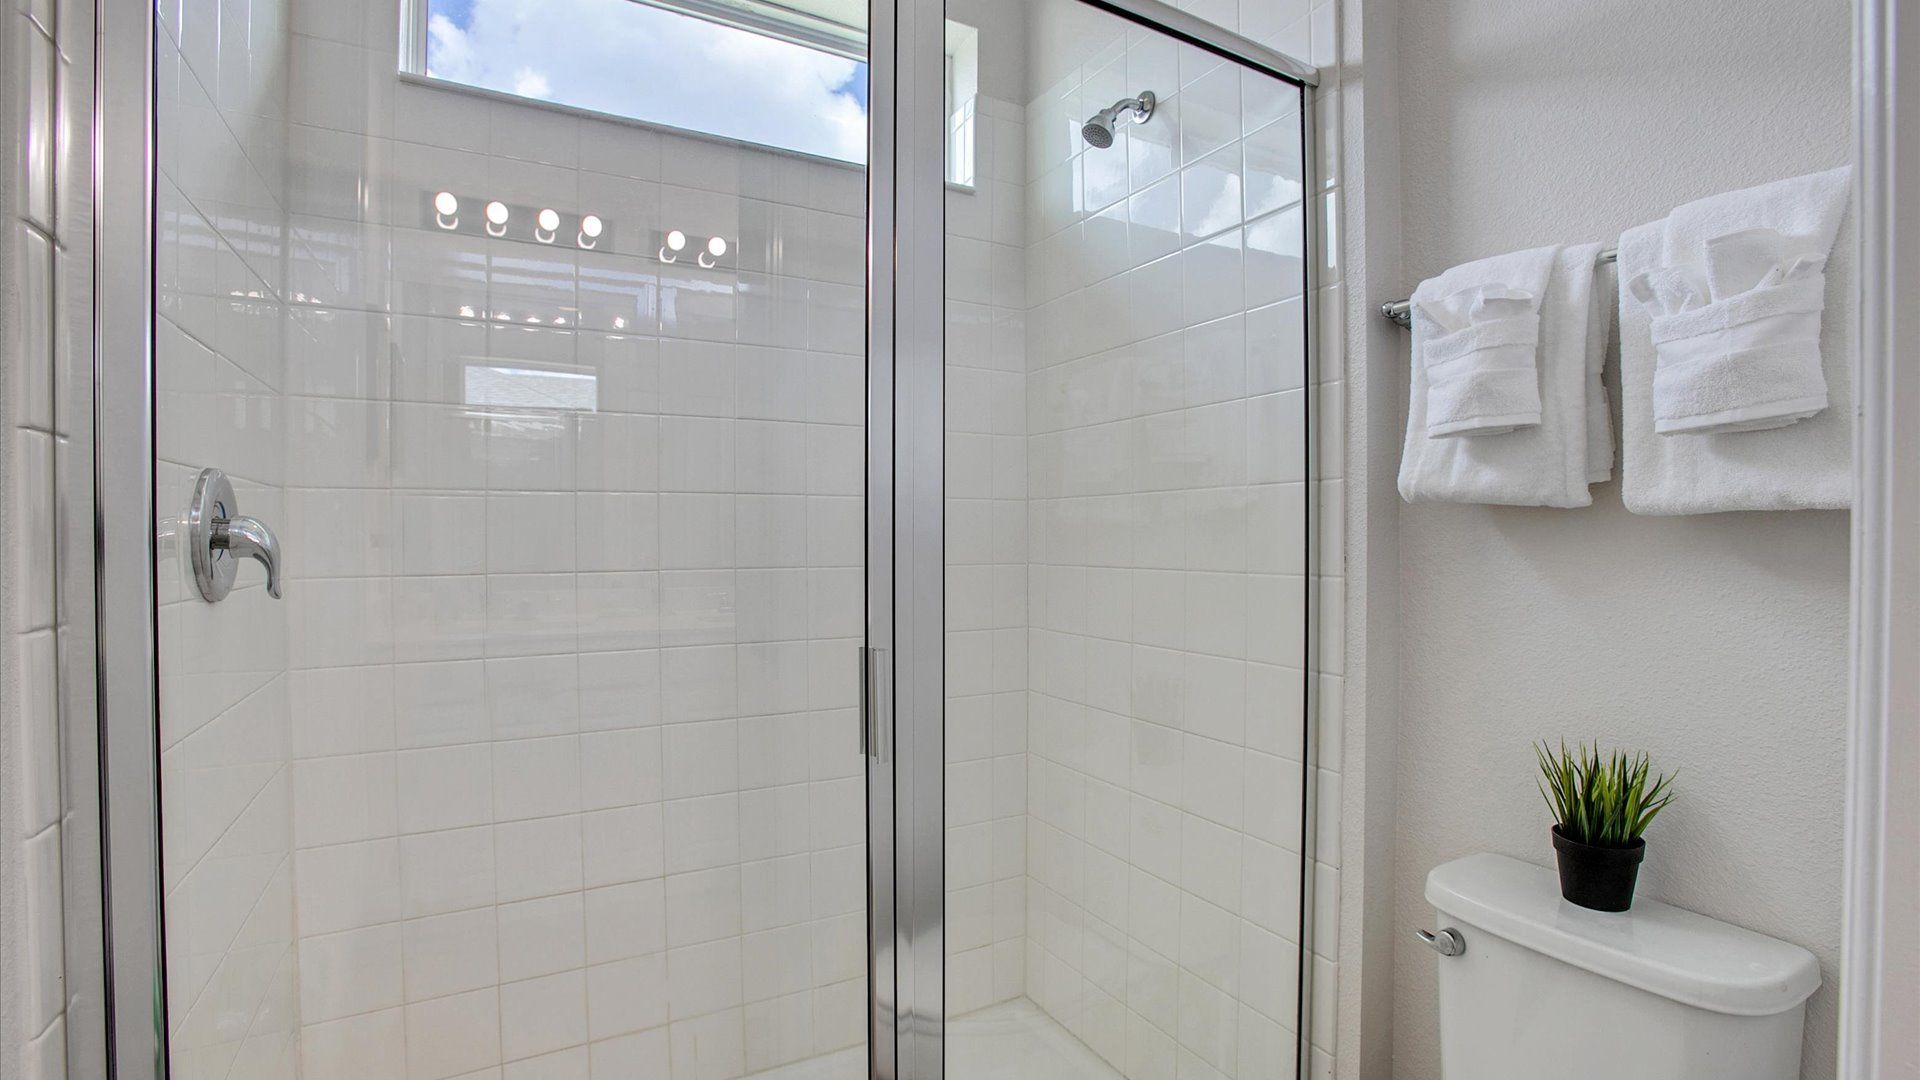 Jack N Jill Bathroom 3 (Angle)
Shower